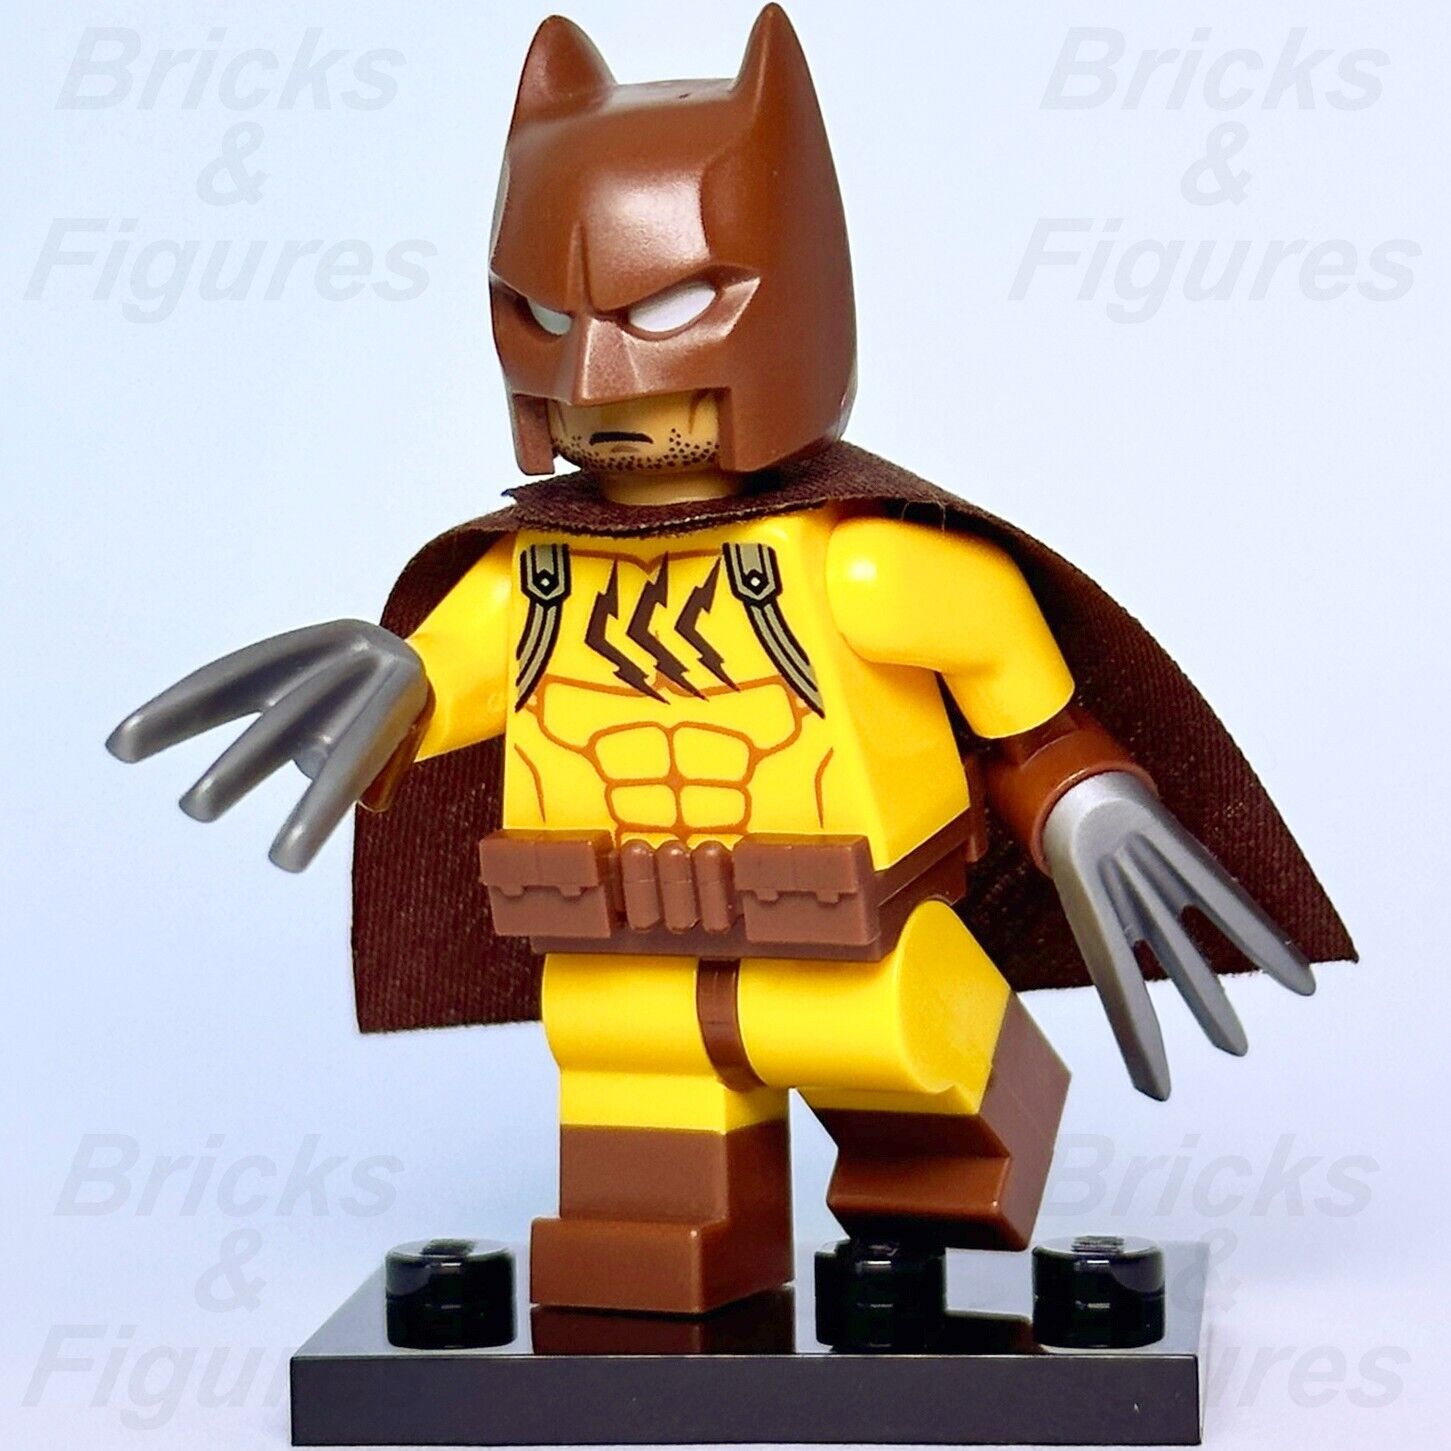 DC LEGO Batman Movie Glam Metal Batman Minifigure [No Packaging] 